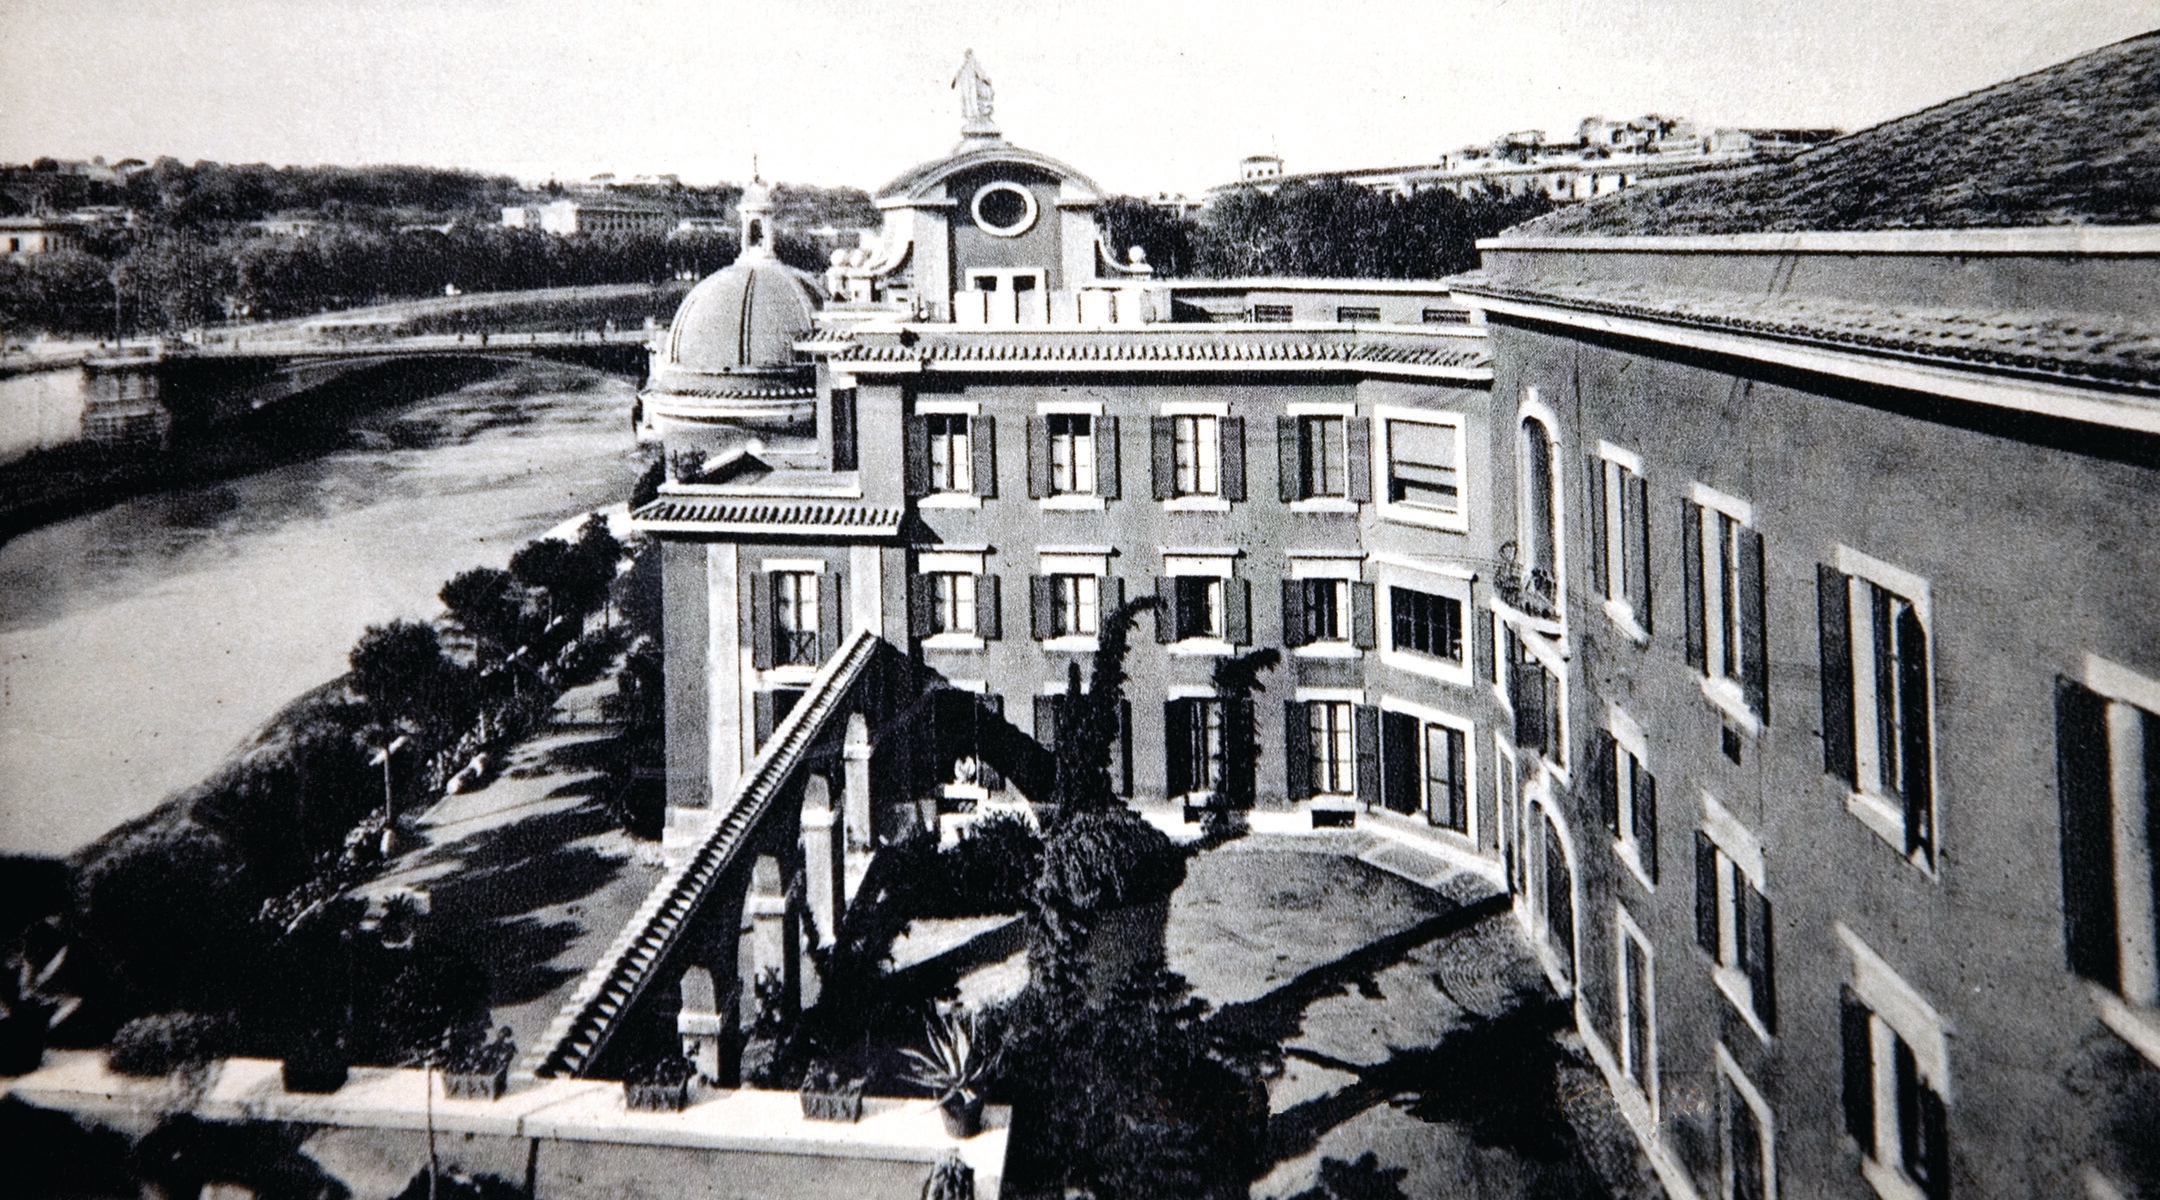 Fatebenefratelli Hospital in Rome